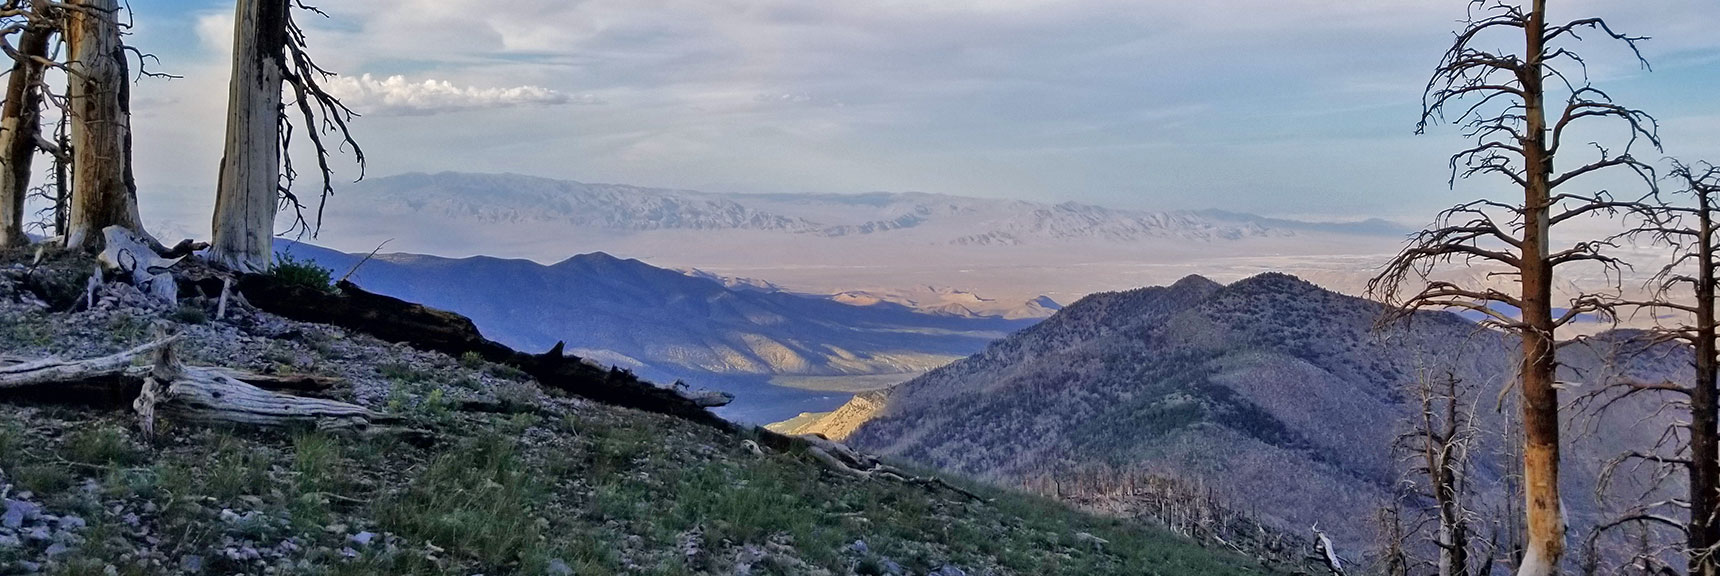 Harris Mountain Viewed Down Griffith Peak North Ridge. Sheep Range and Gass Peak in Background. | Six Peak Circuit Adventure in the Spring Mountains, Nevada